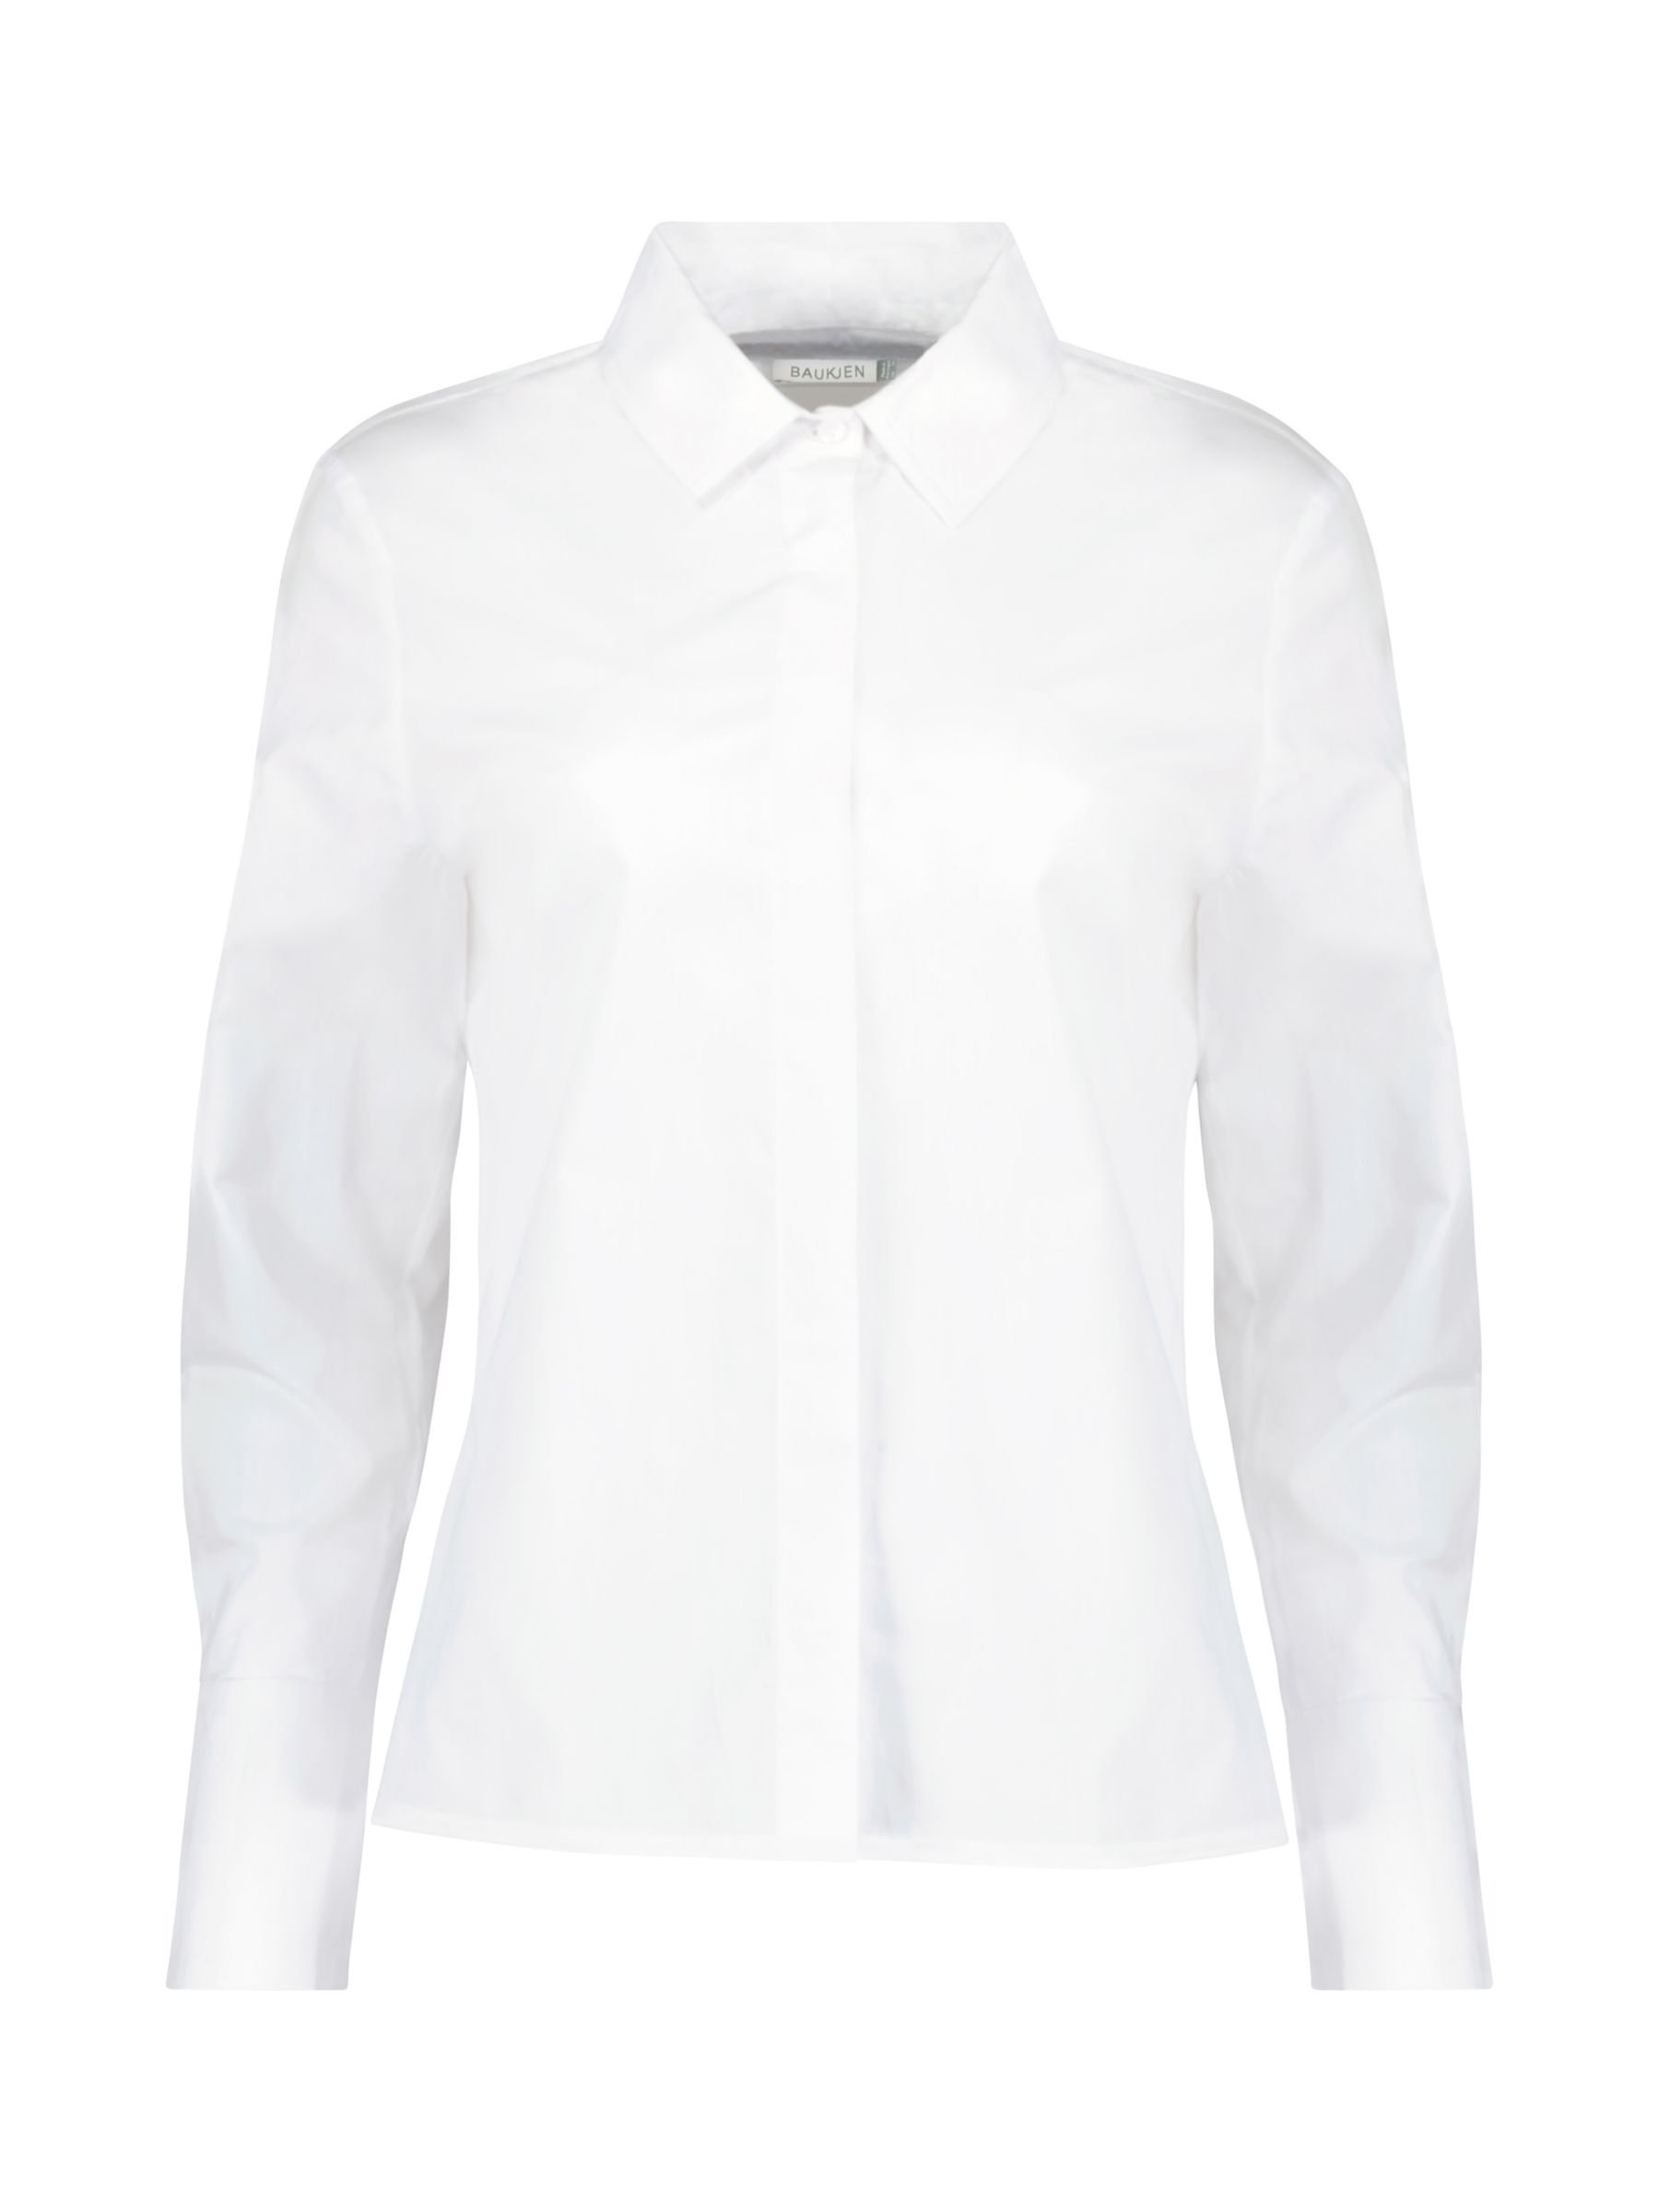 Baukjen Tinsley Plain Organic Cotton Classic Shirt at John Lewis & Partners